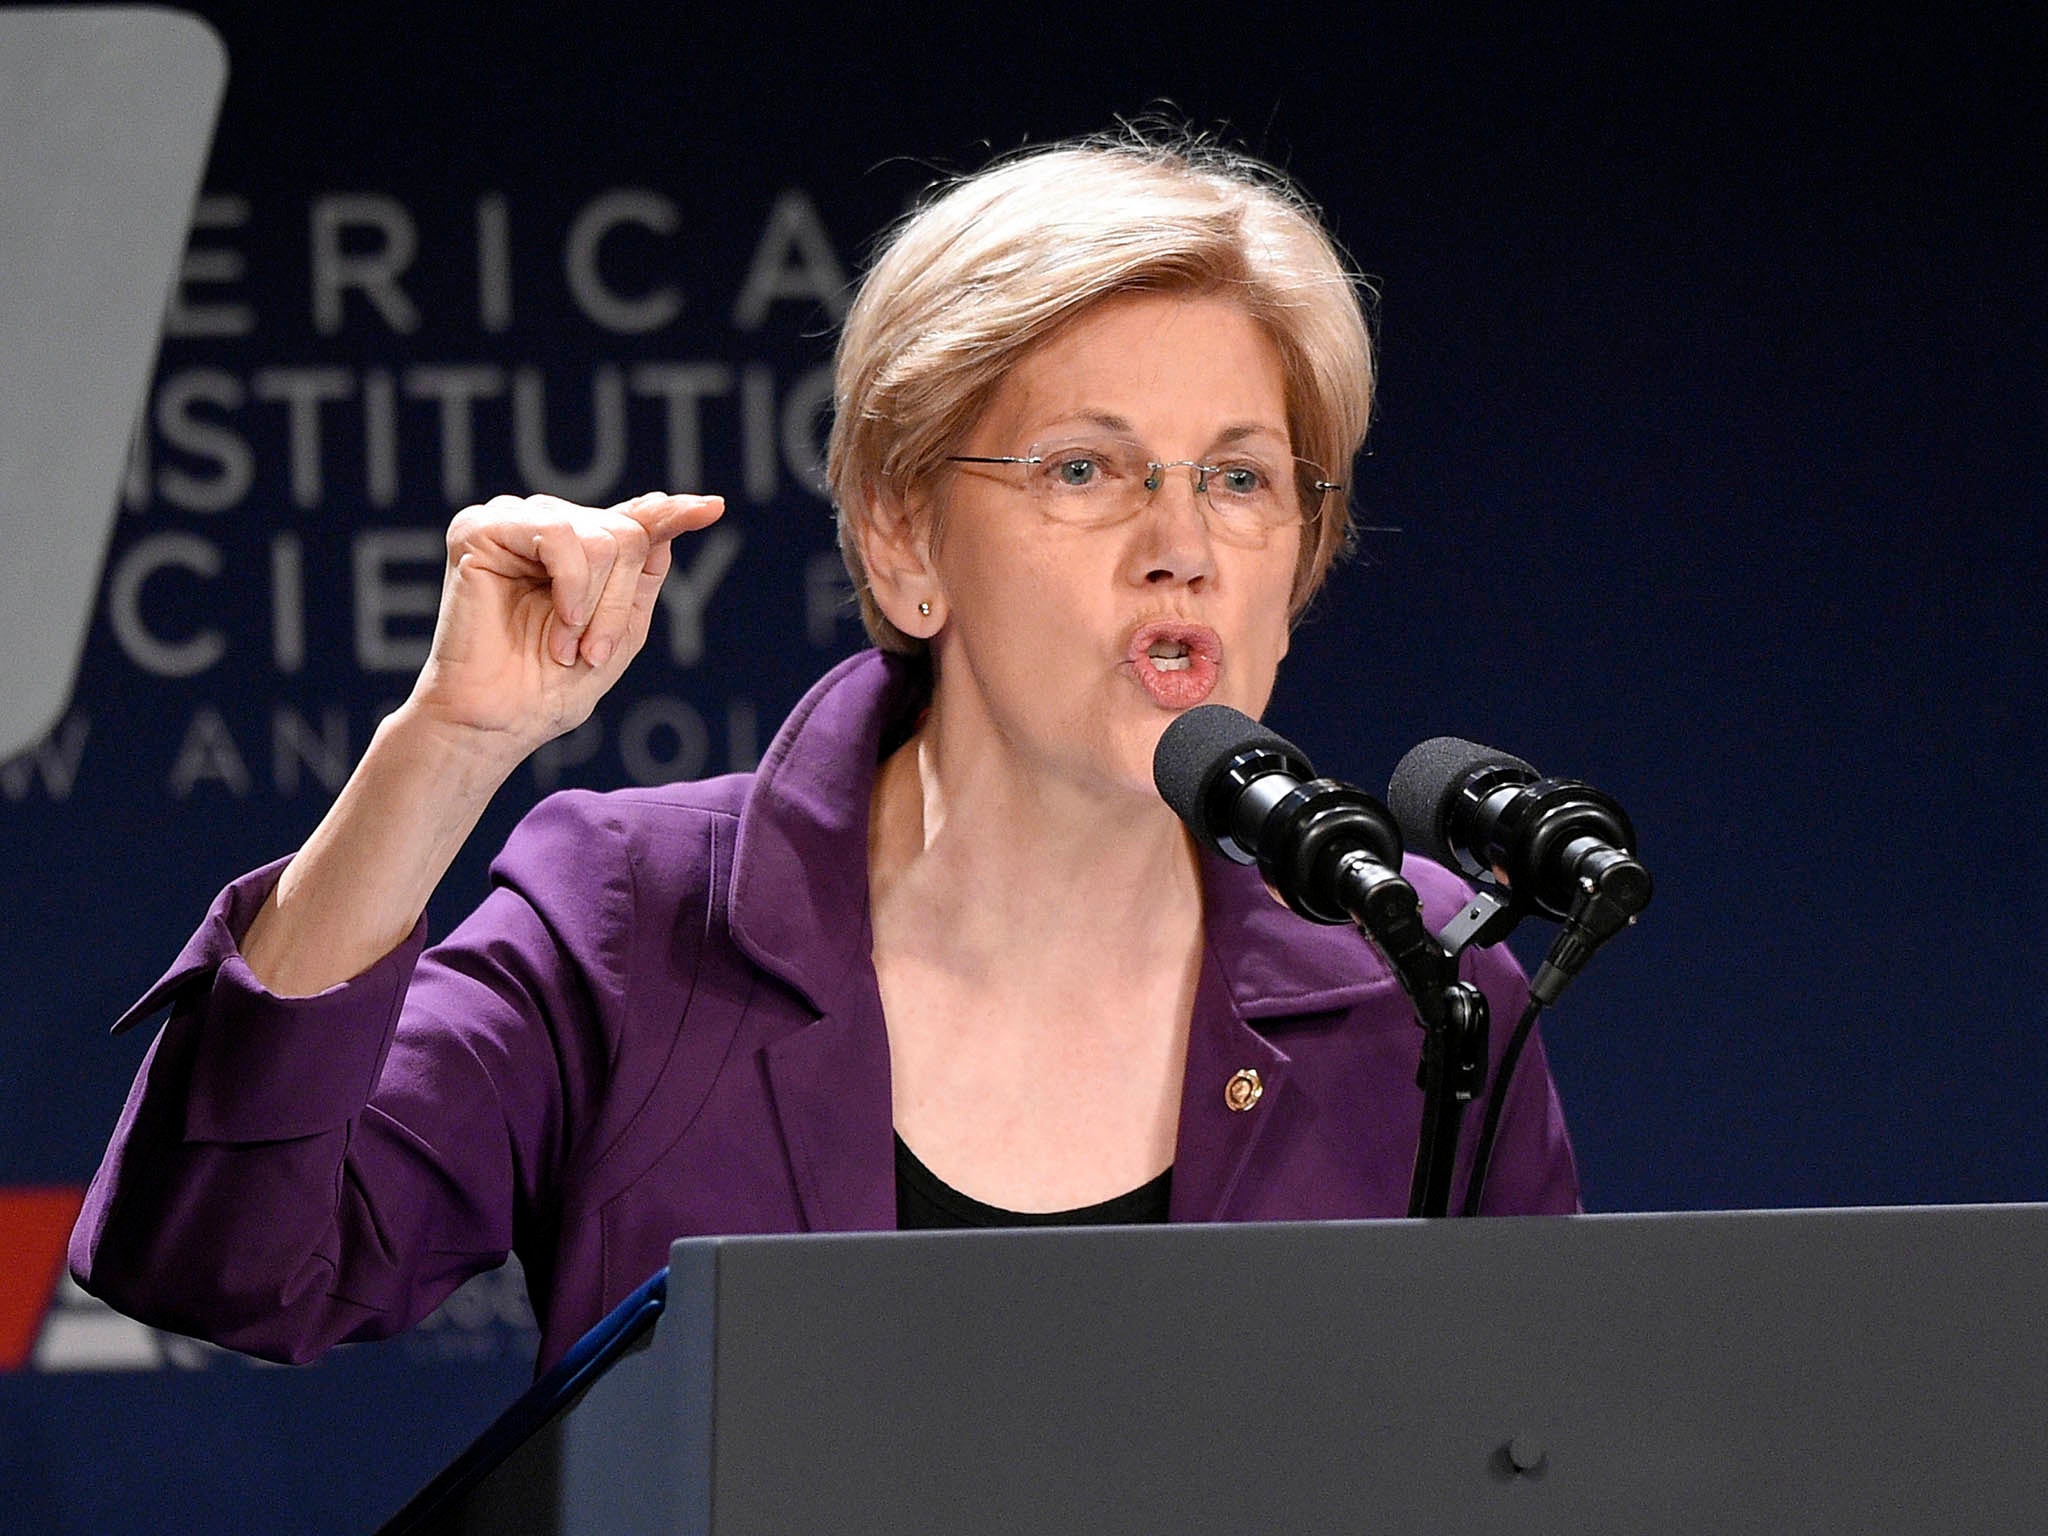 Elizabeth Warren described the President's comments as "deeply unfortunate"